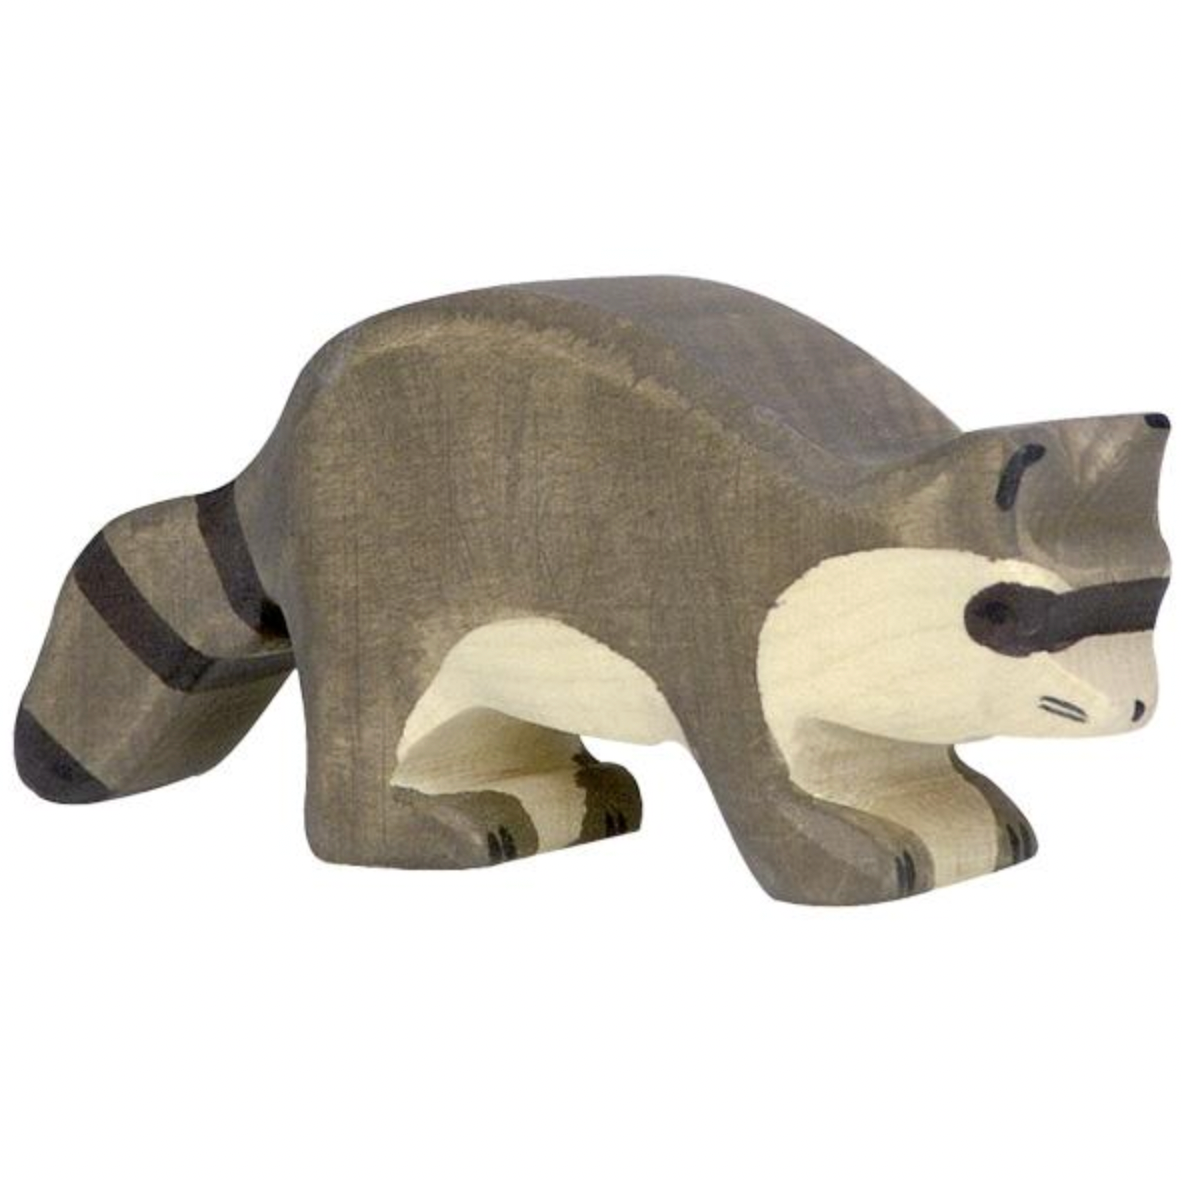 Holztiger- Raccoon